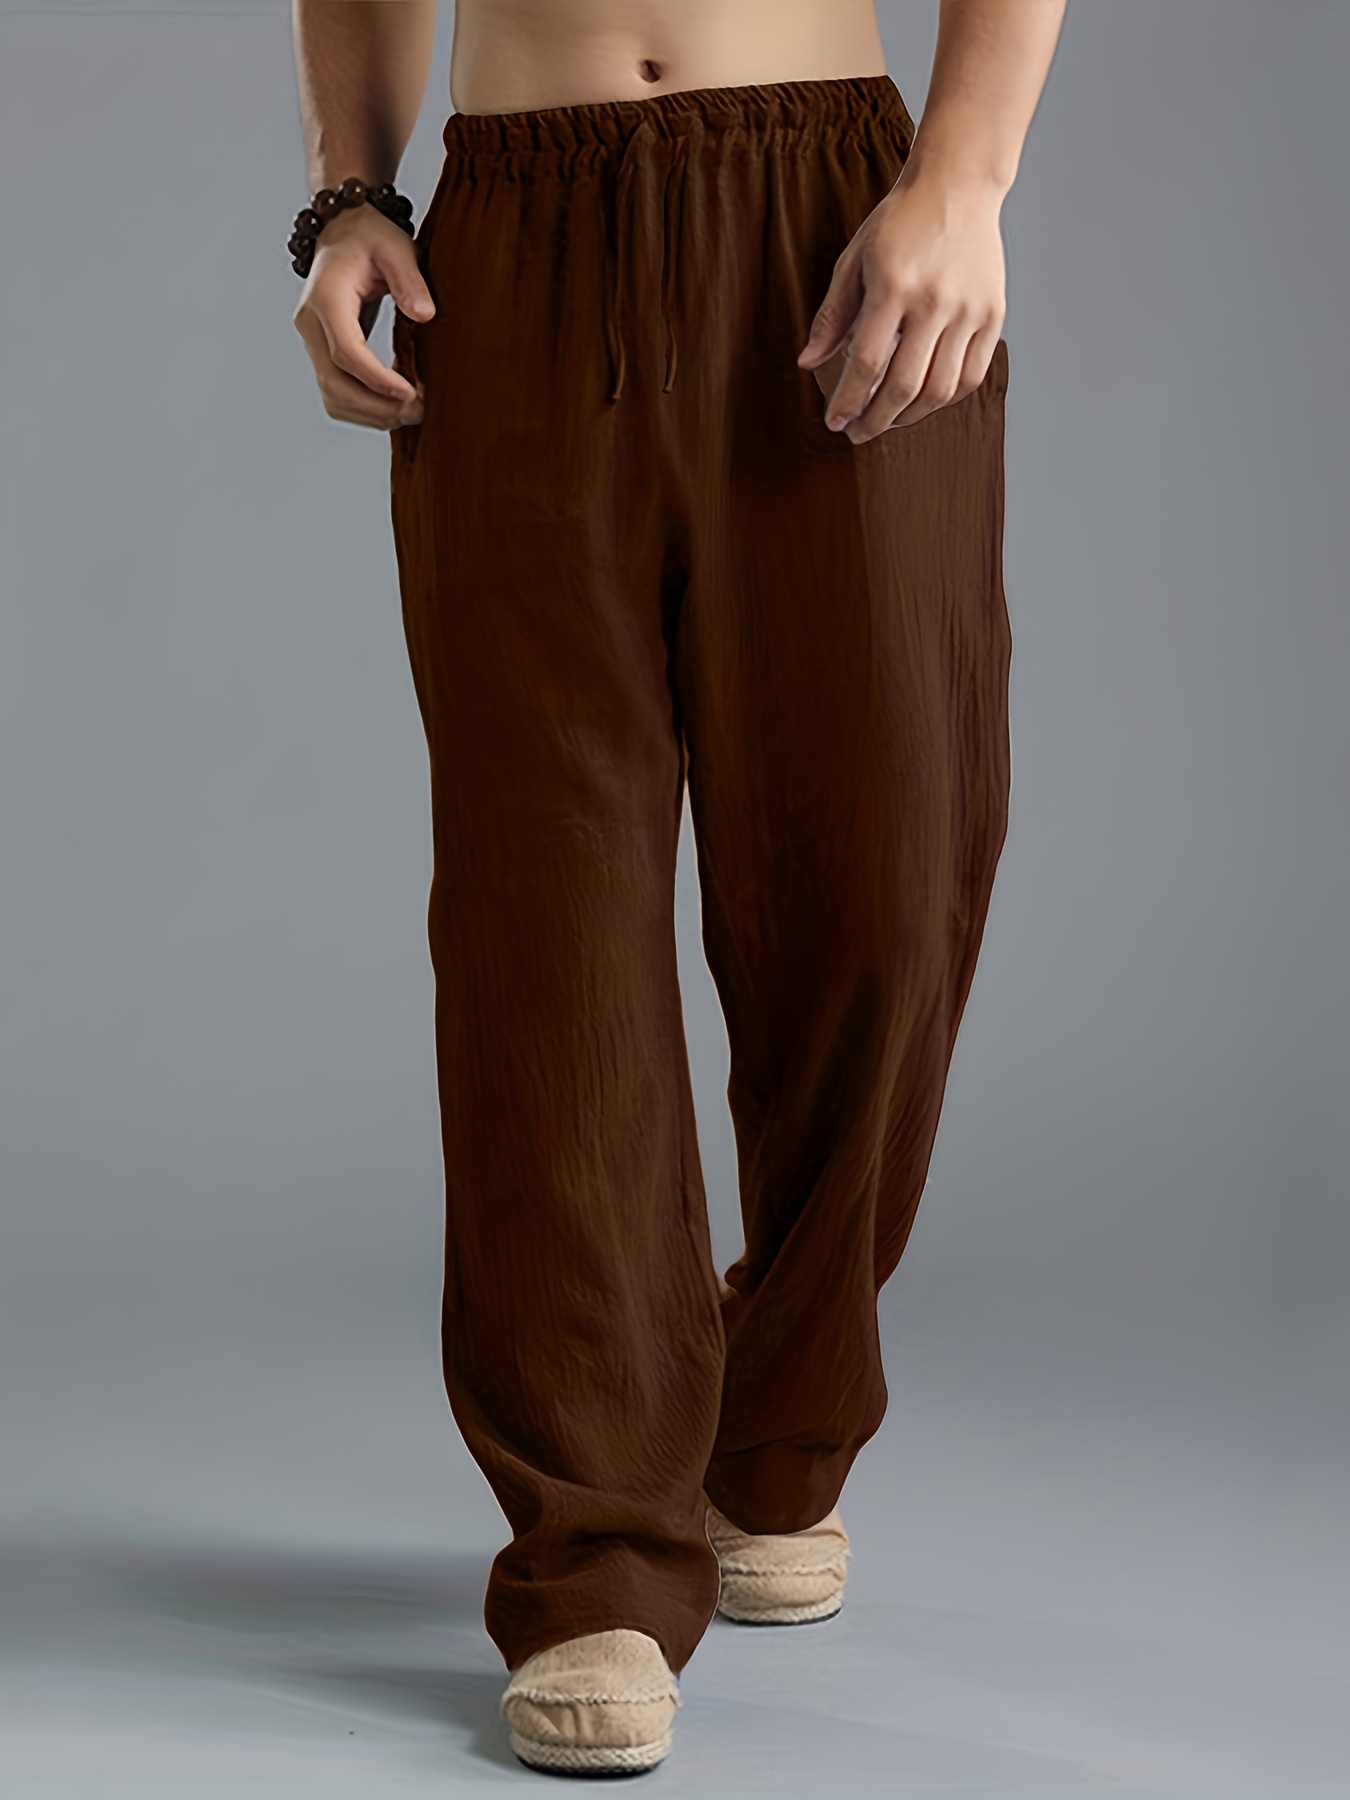 Harem Pants For Men Casual Slim Sports Pants Calf-Length Linen